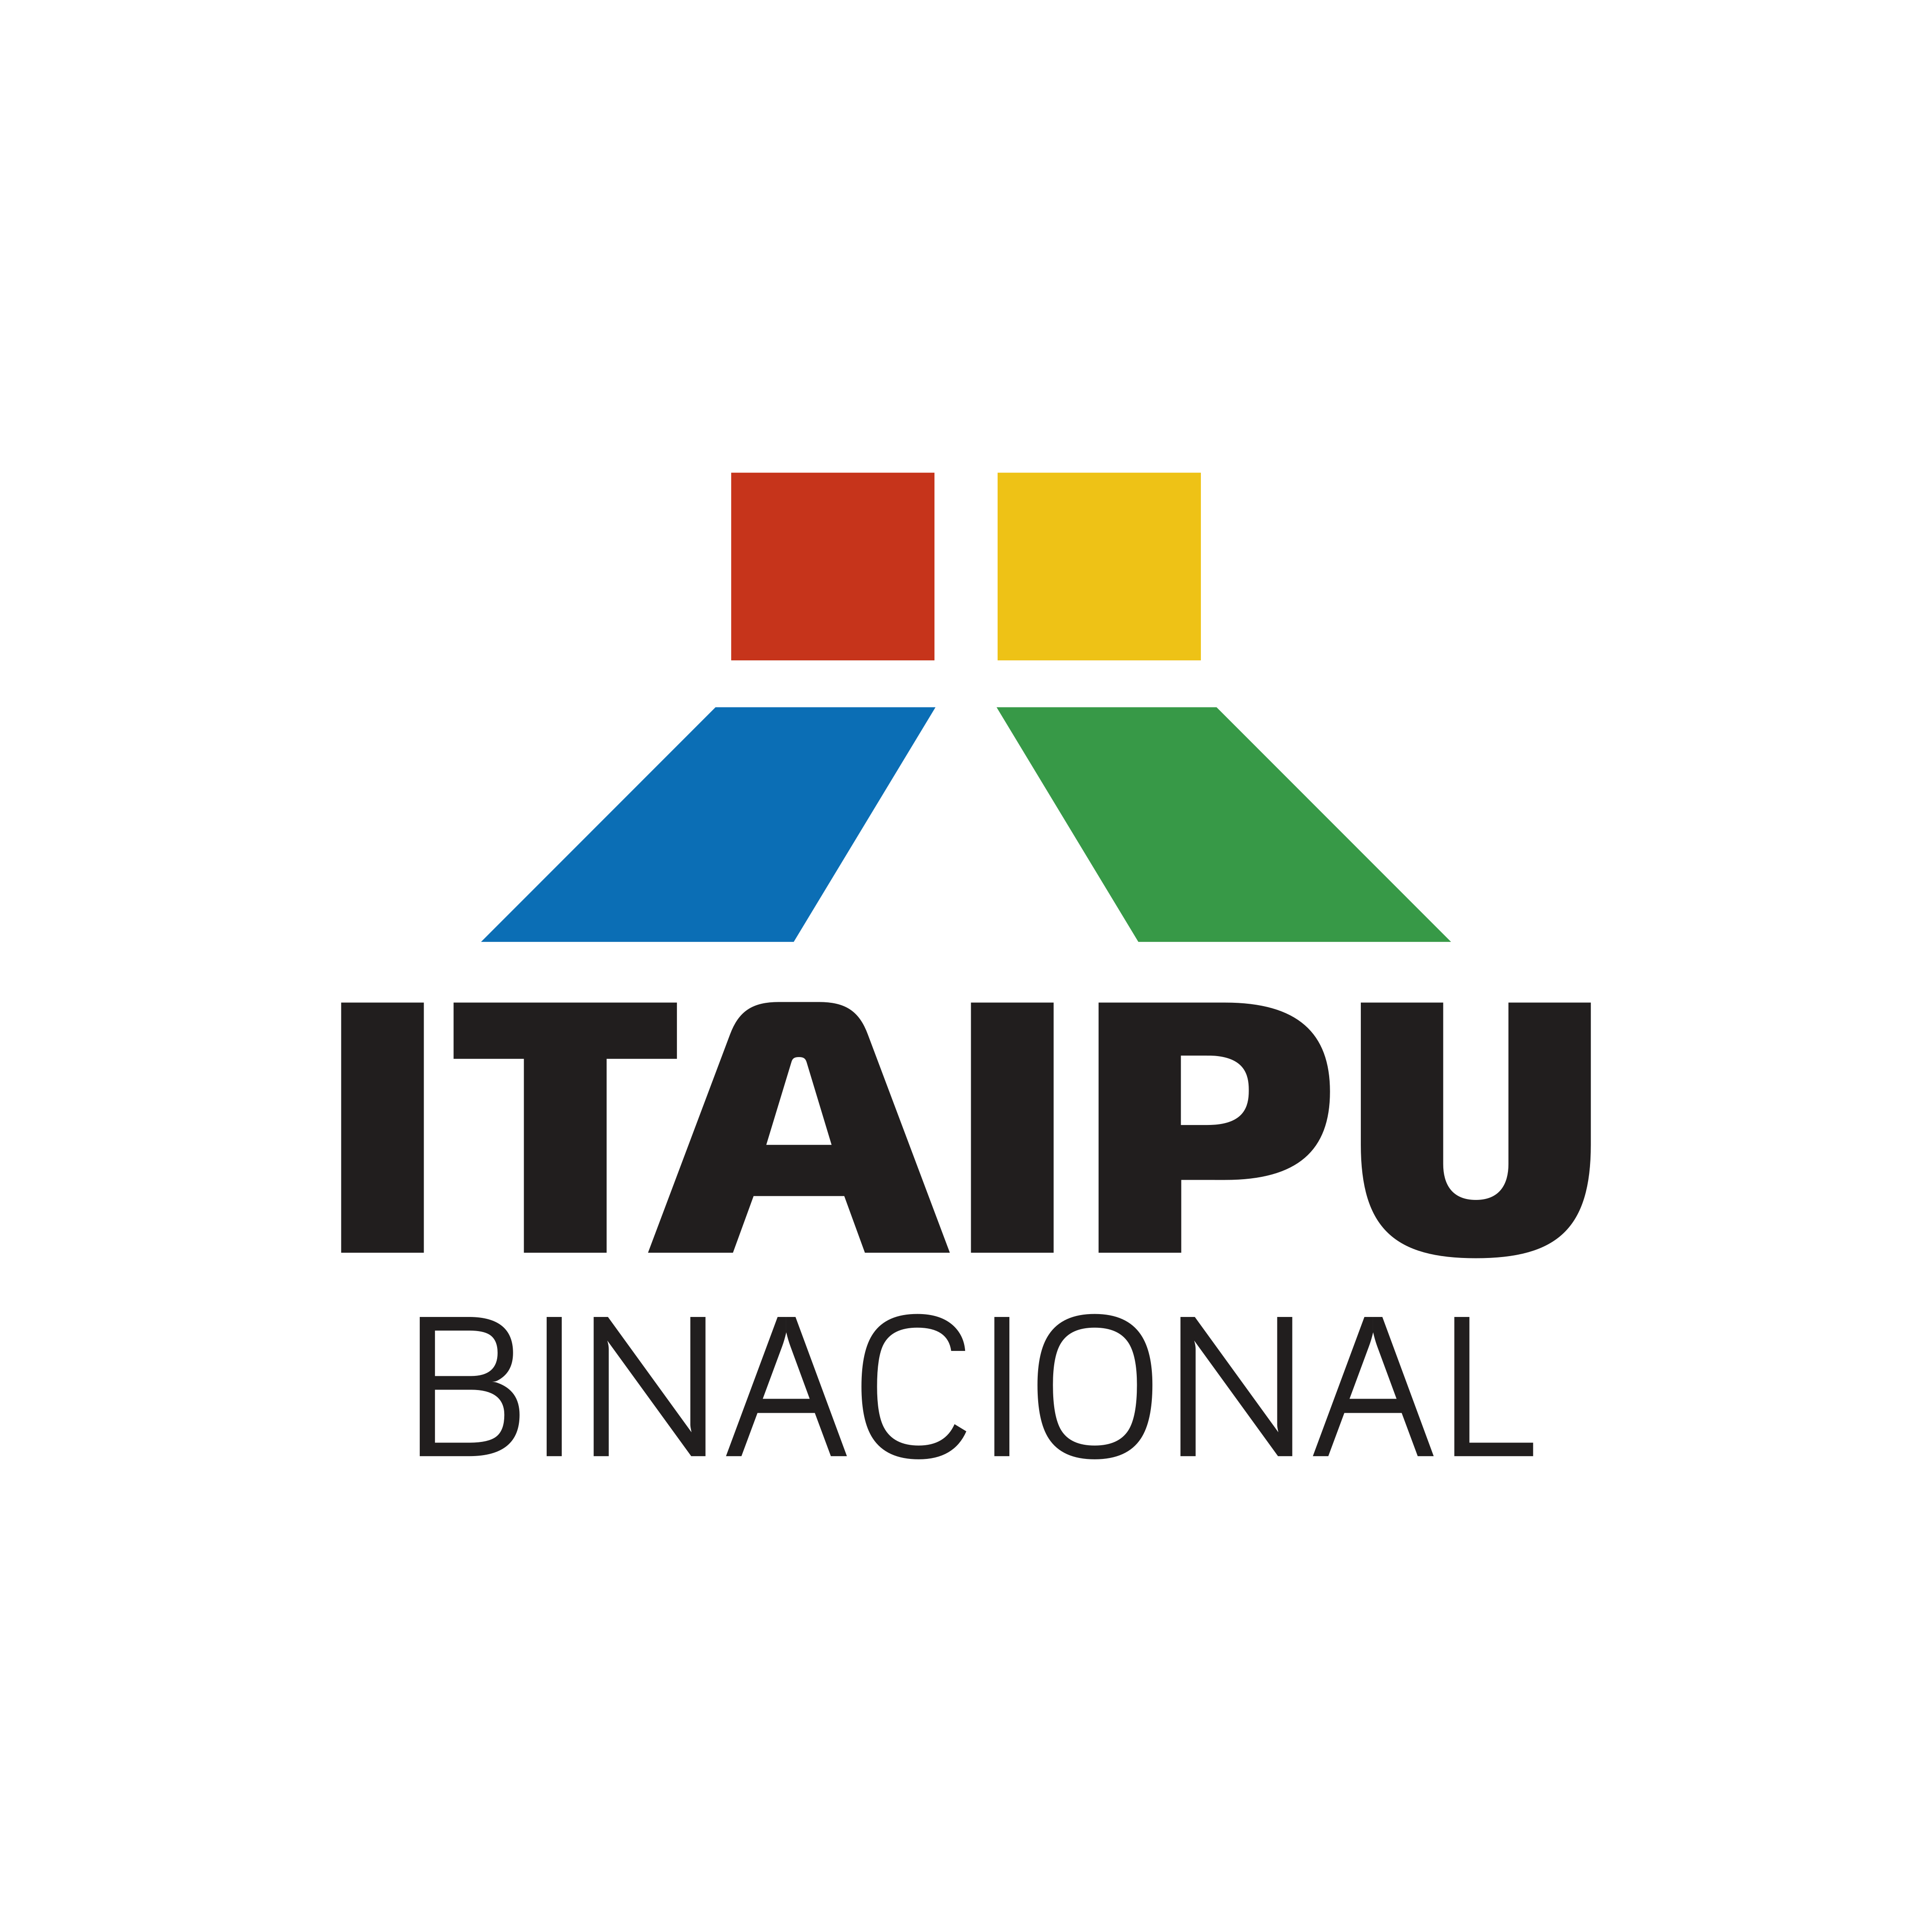 Itaipu Binacional Logo PNG.